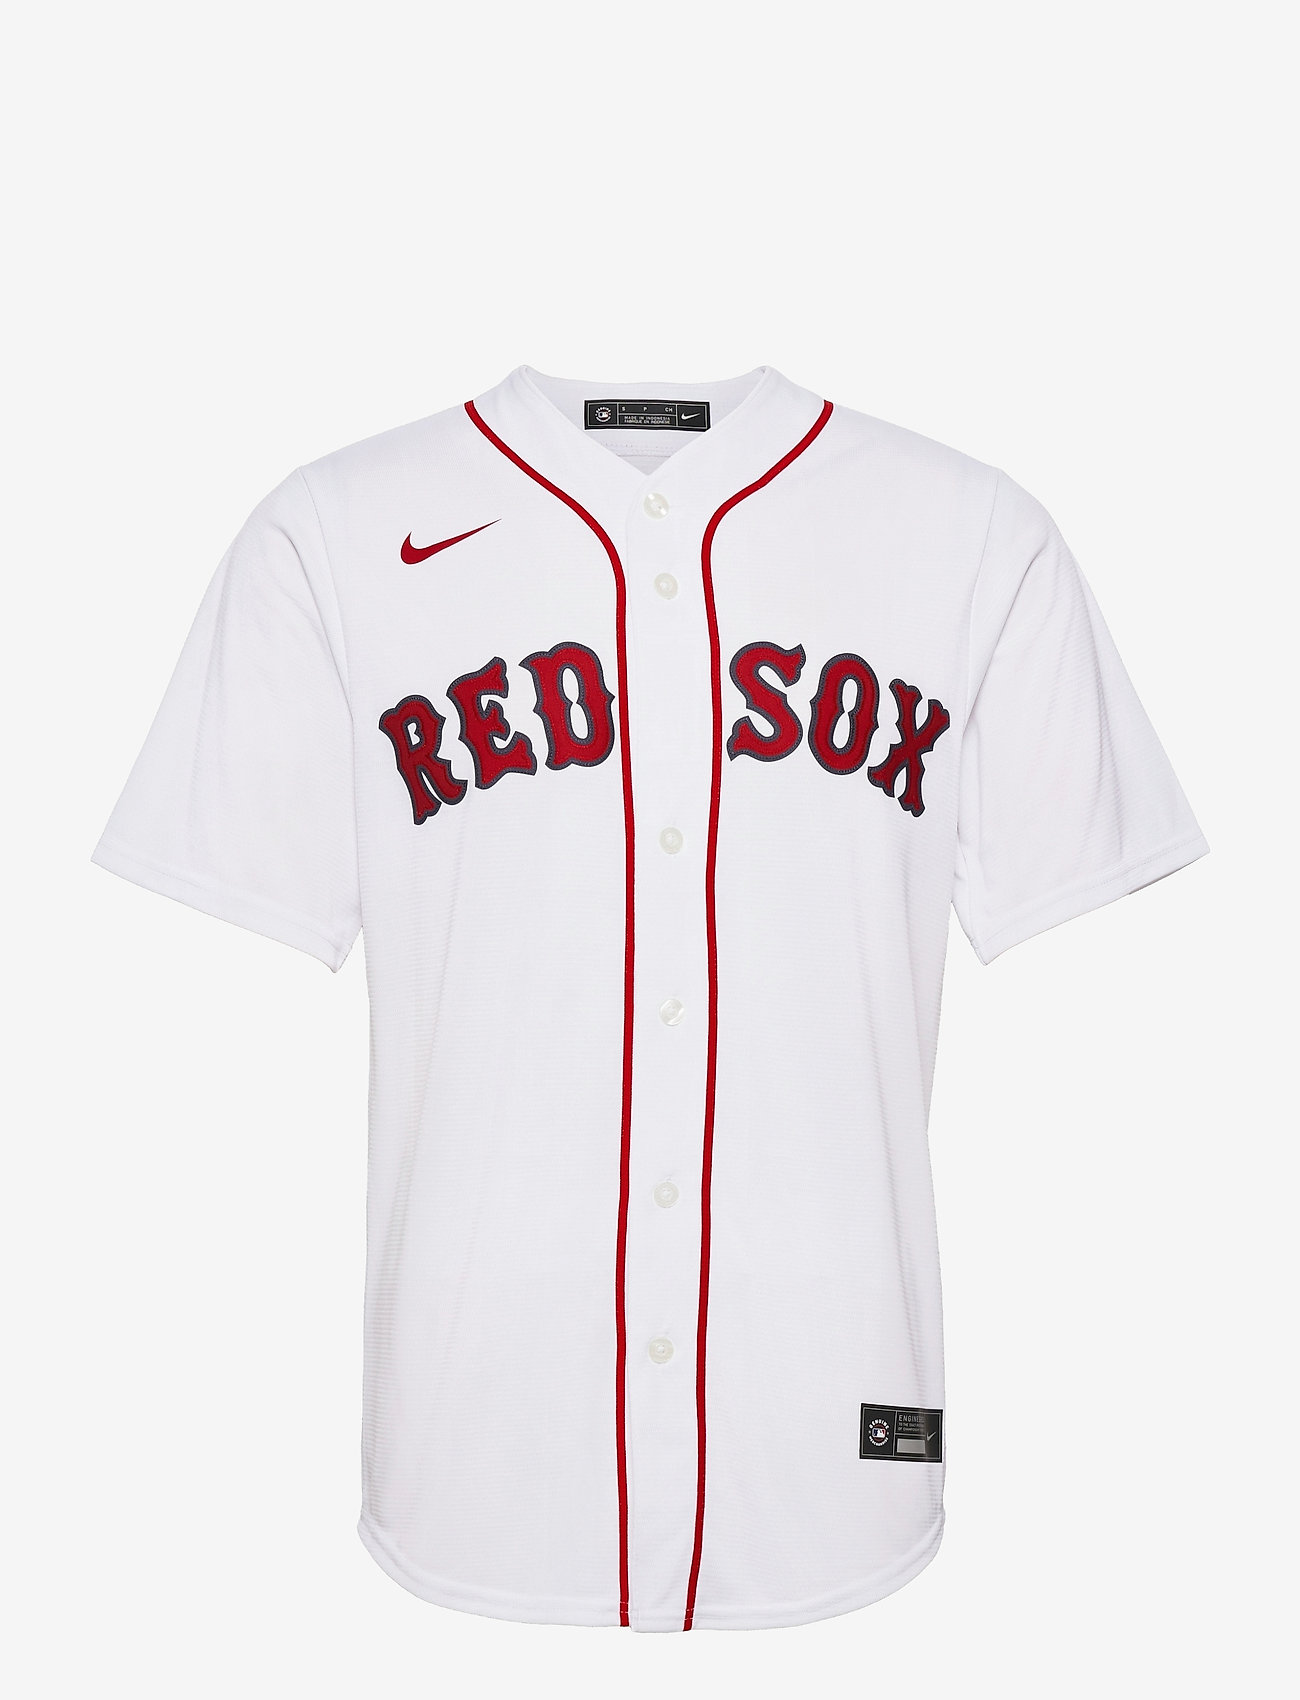 boston red sox white jersey